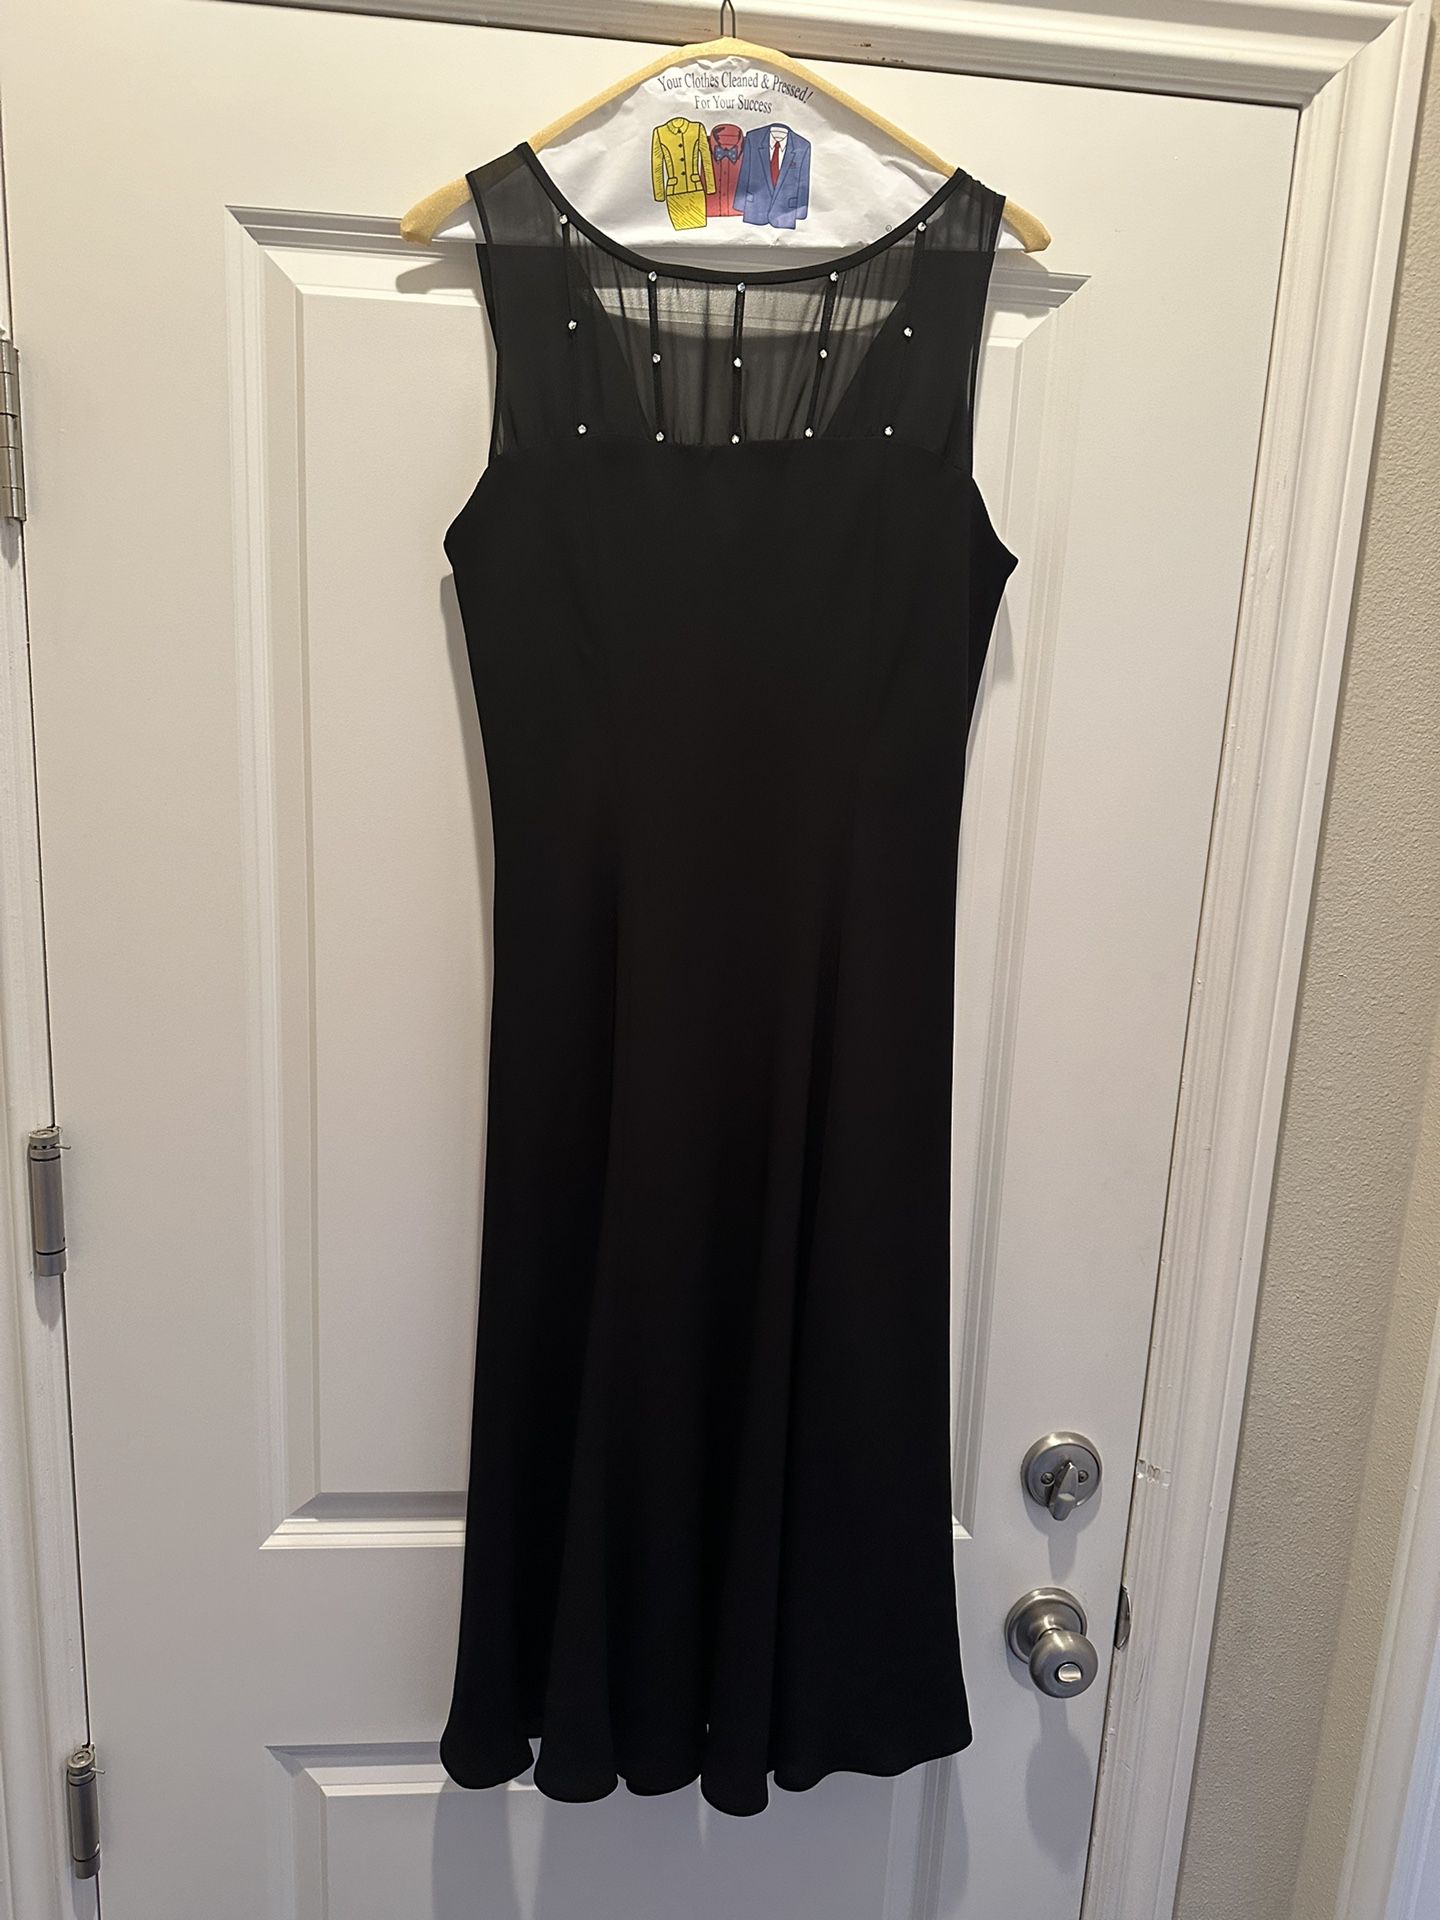 Black cocktail dress size 12